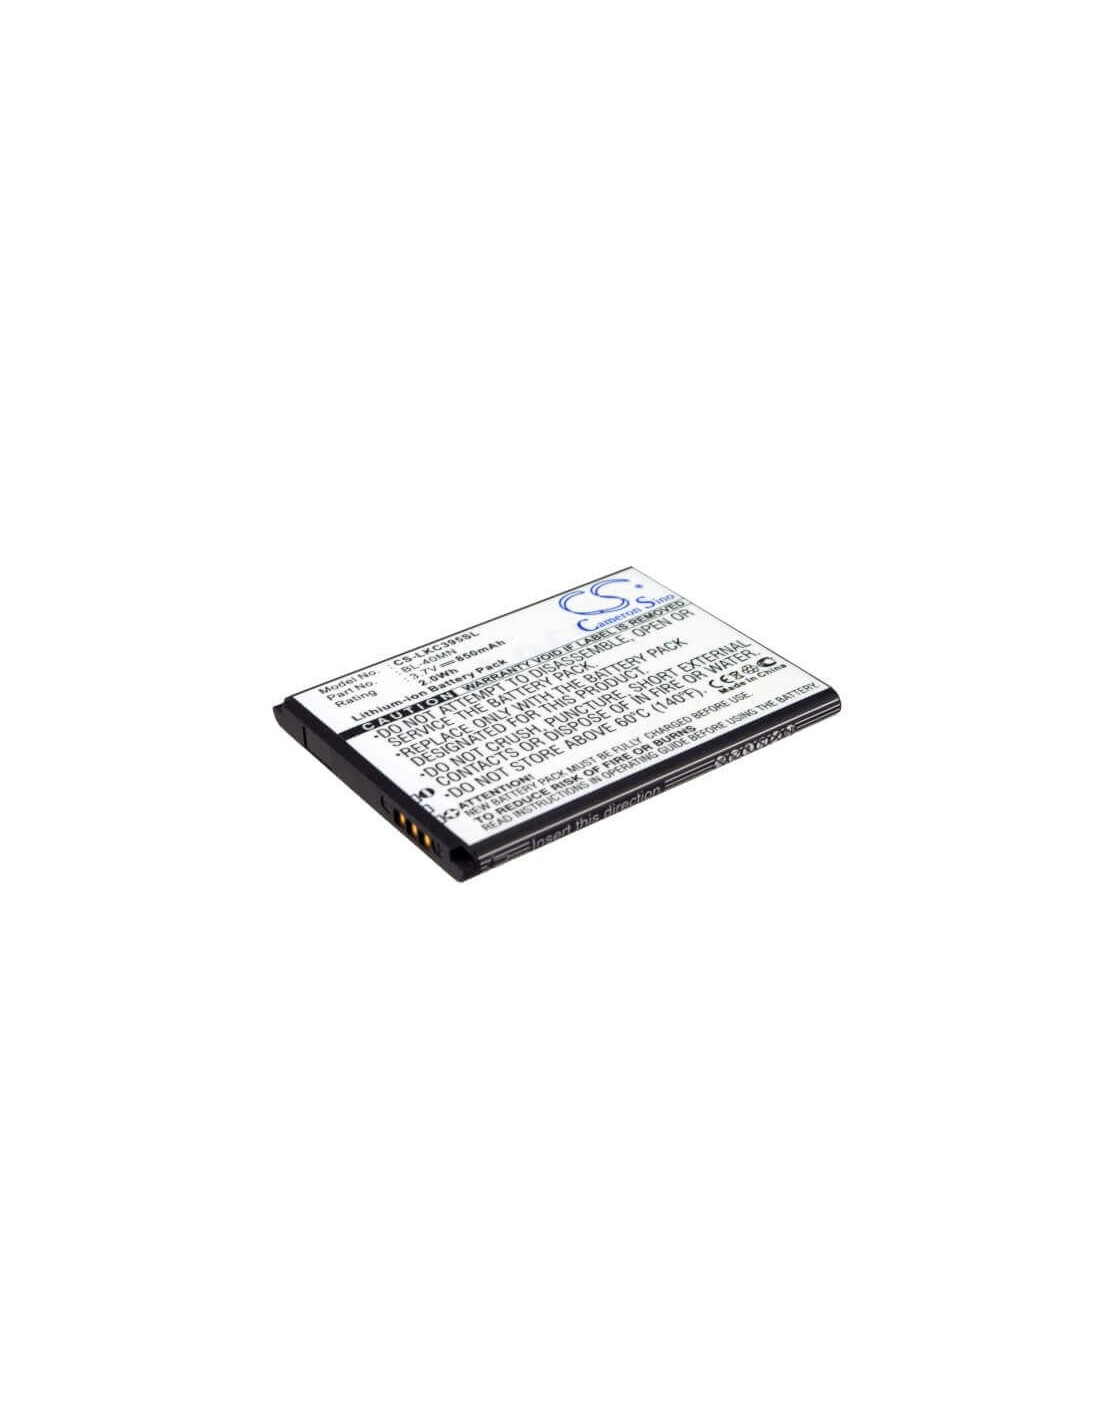 Battery for LG Xpression C395, Xpression C395C, C395C 3.7V, 850mAh - 3.15Wh